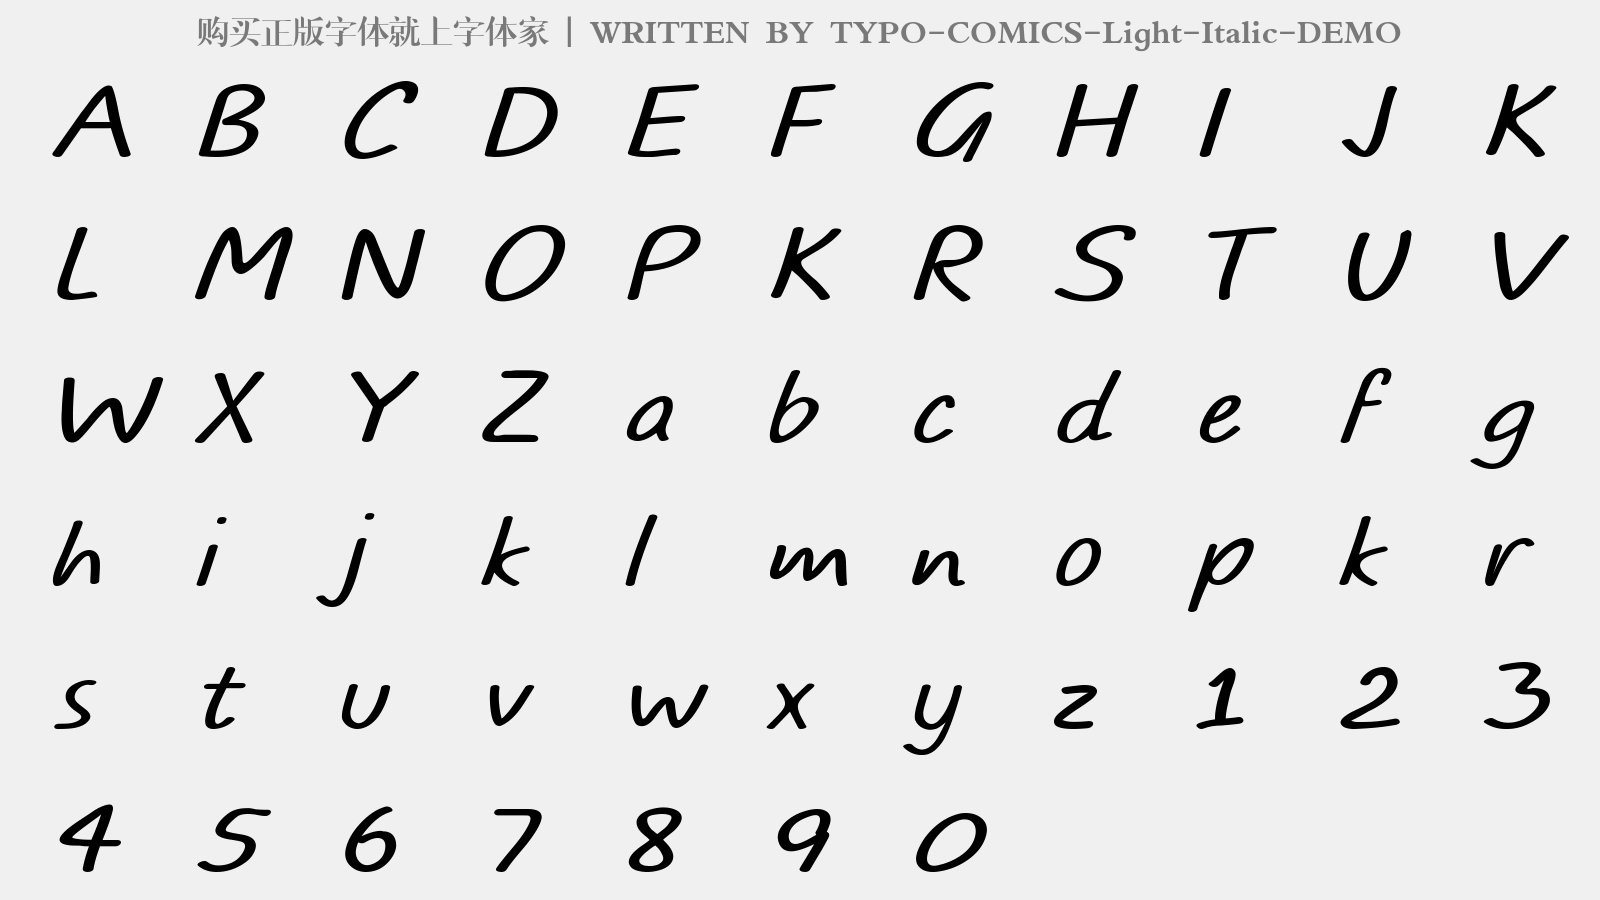 TYPO-COMICS-Light-Italic-DEMO - 大写字母/小写字母/数字